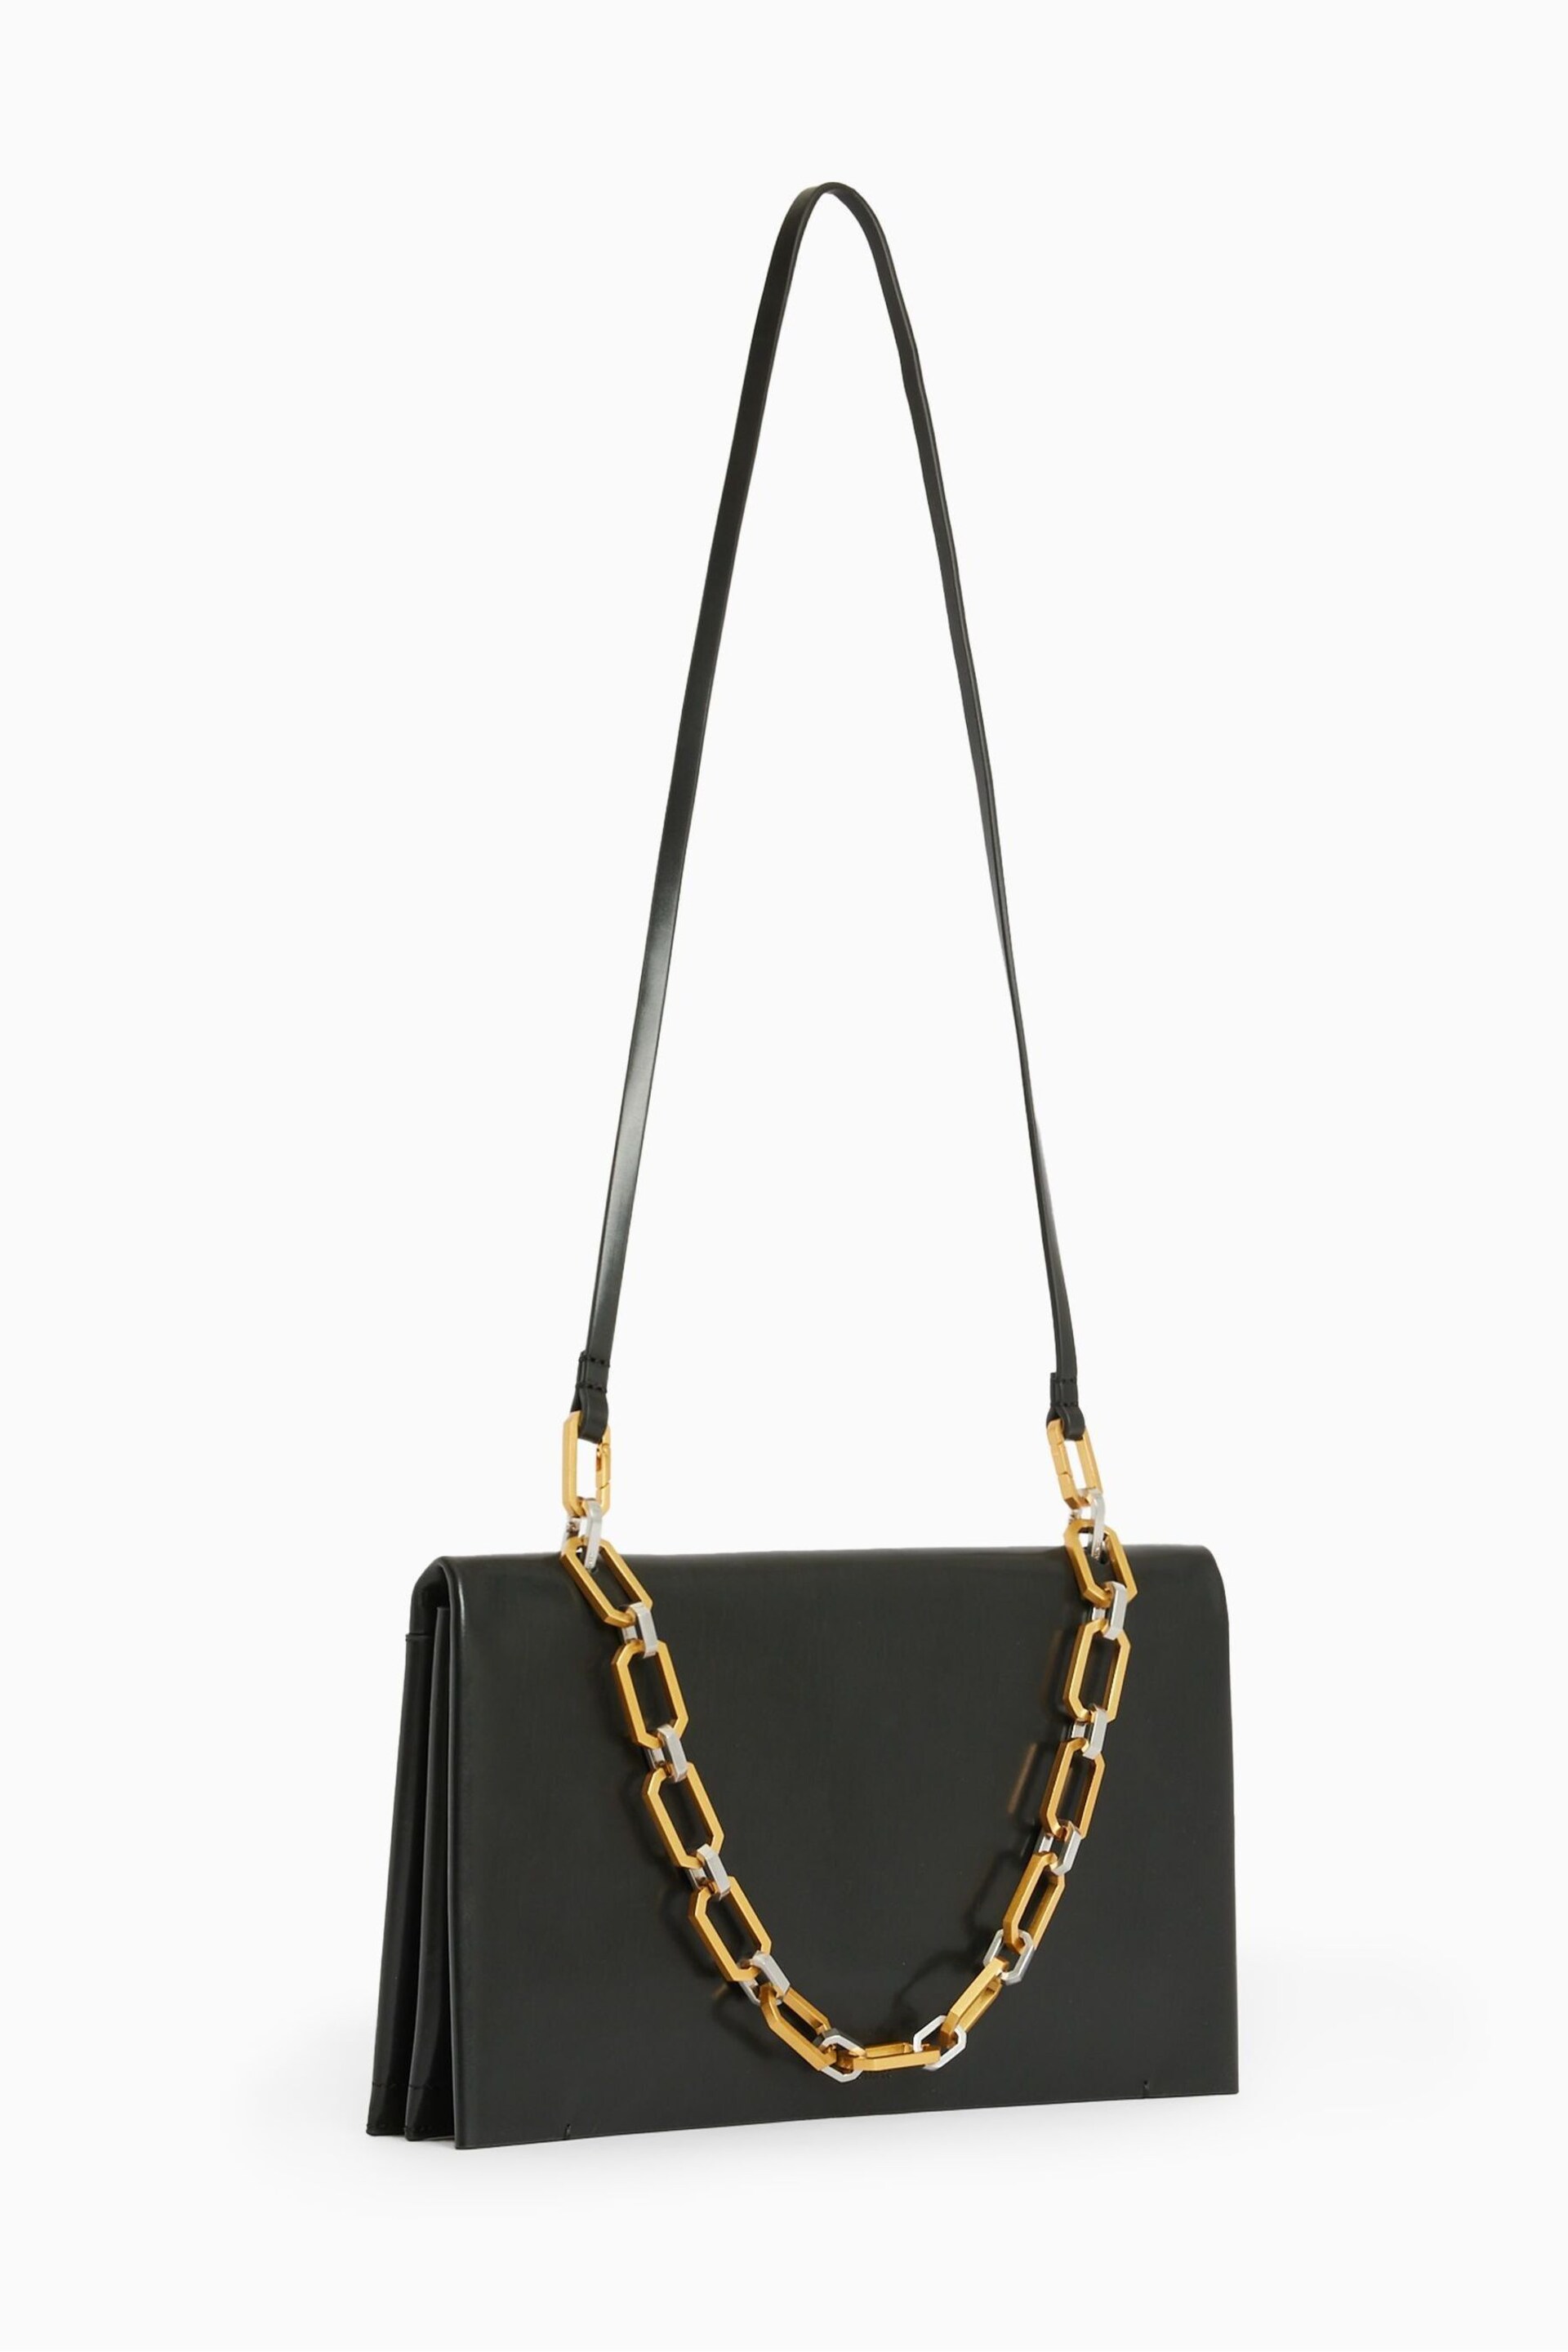 AllSaints Black Akira Clutch Bag - Image 6 of 9